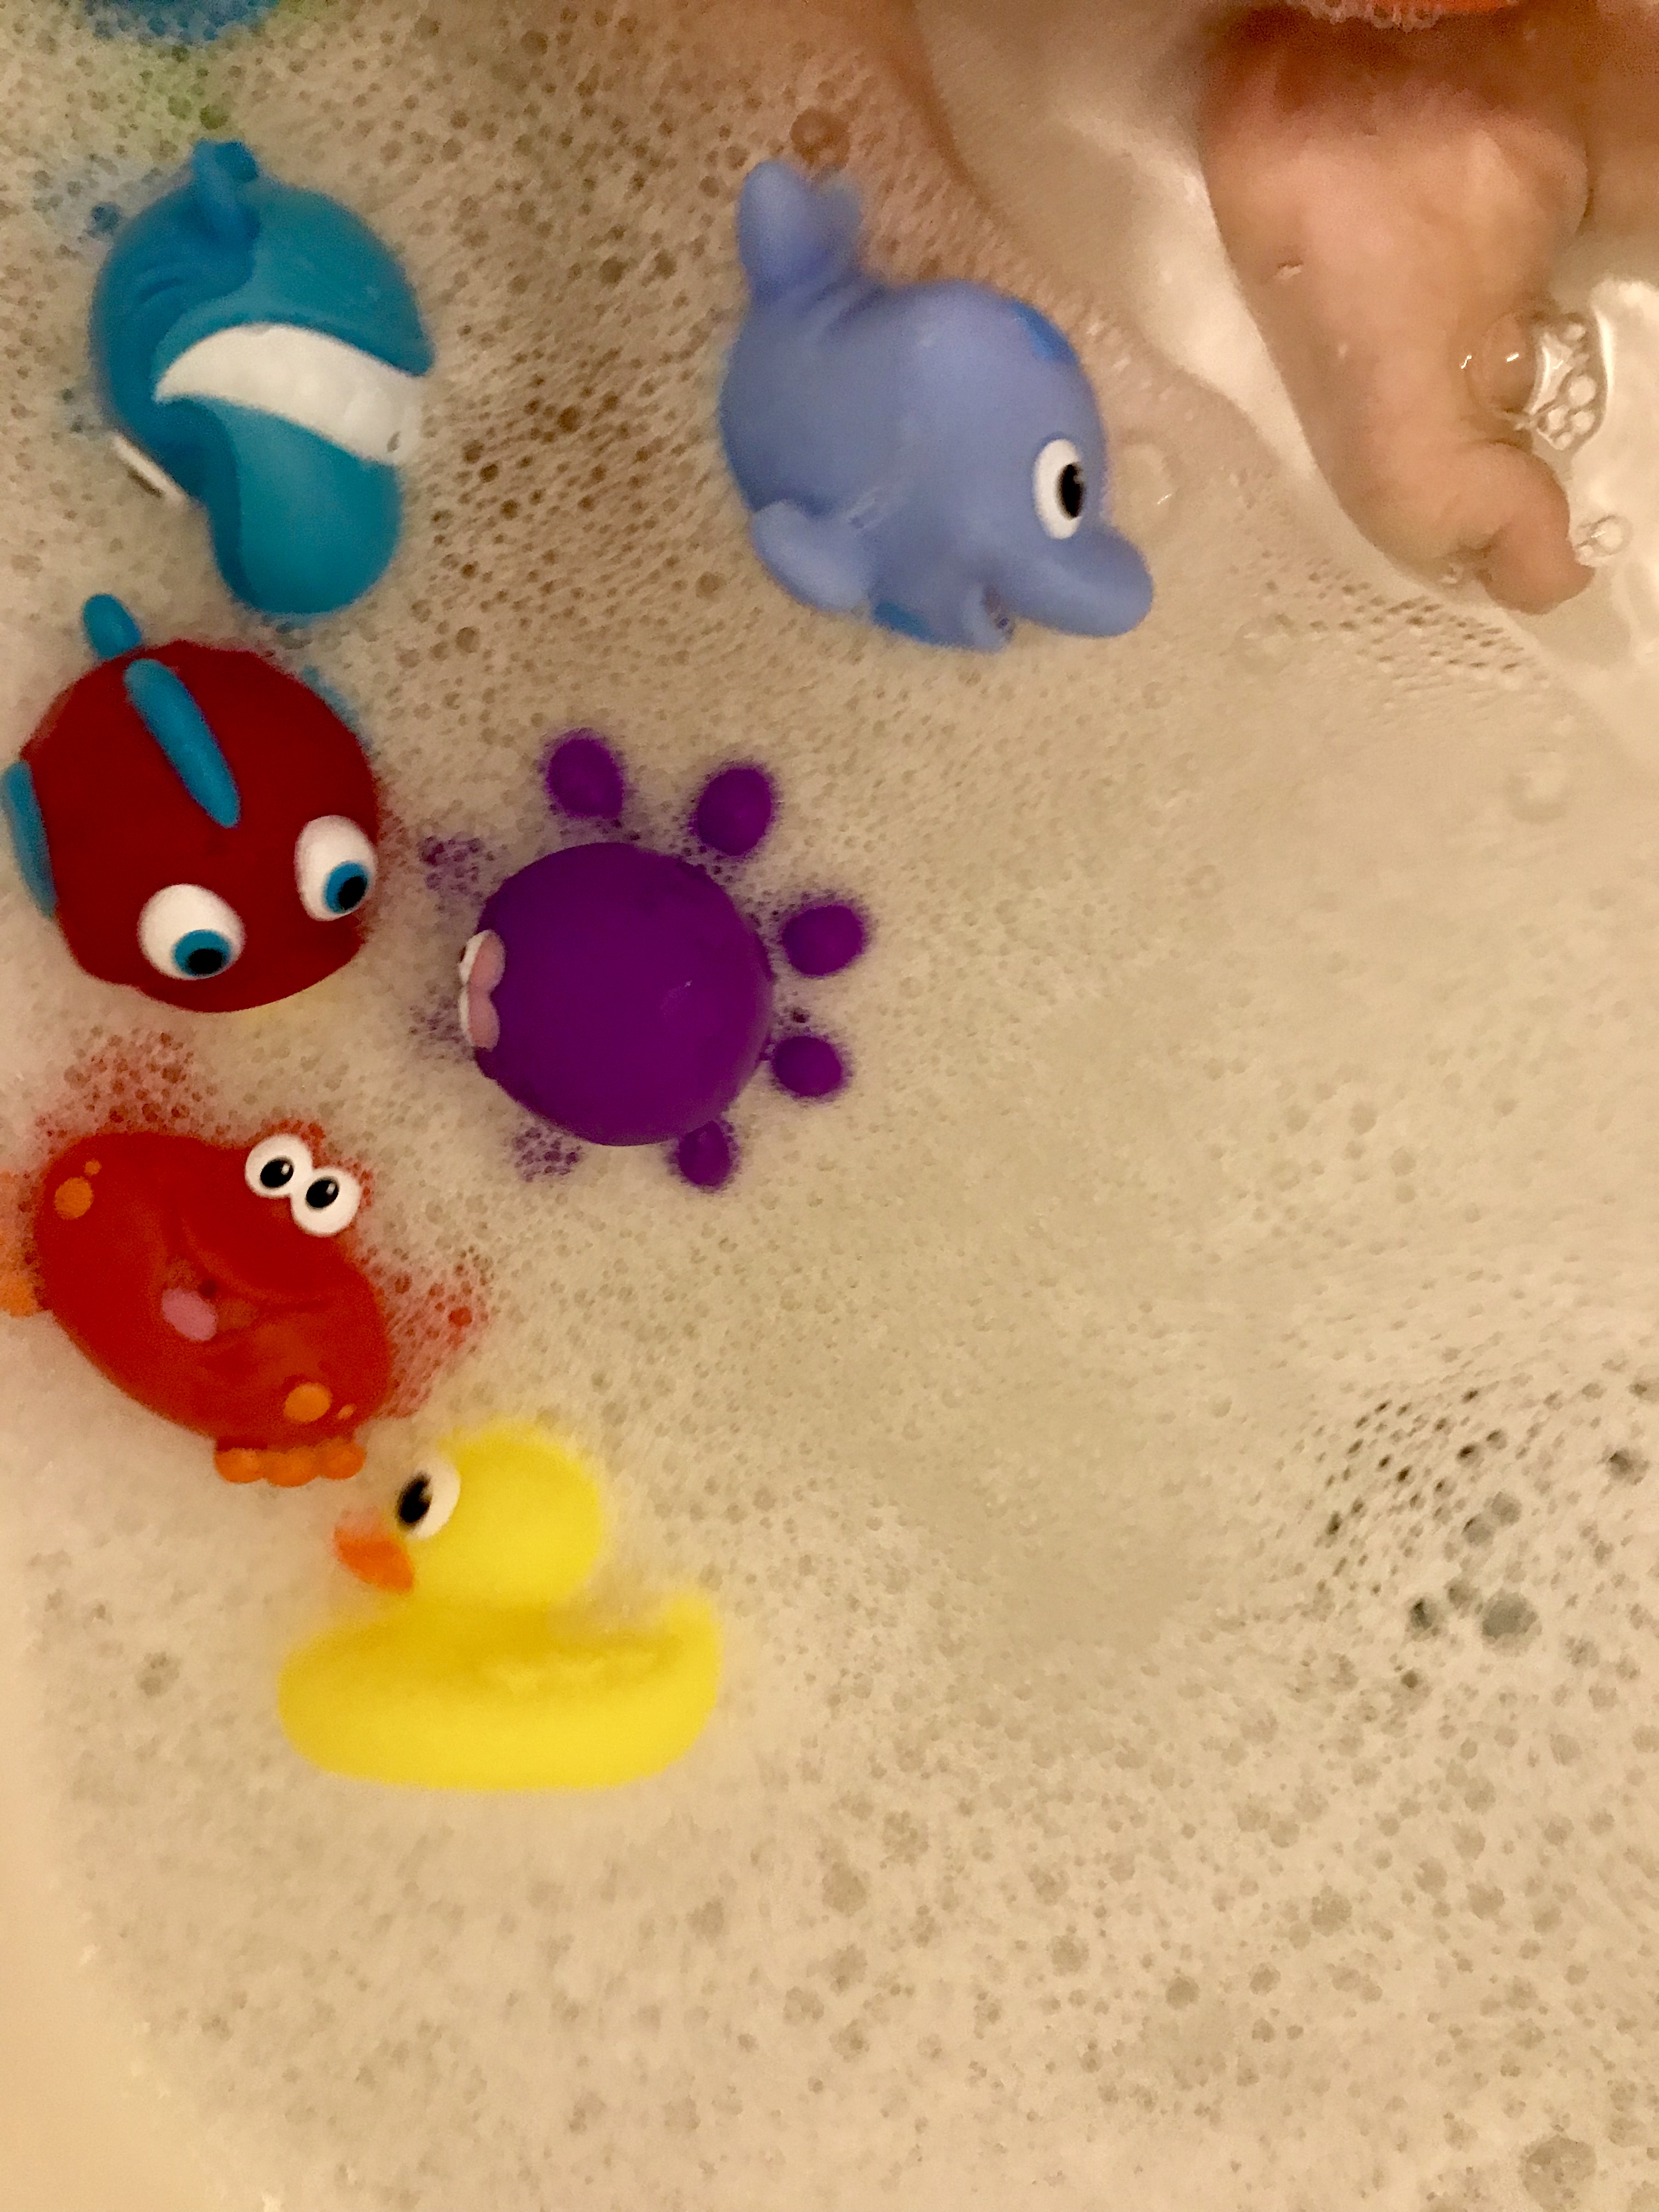 Best bath toys for babies 